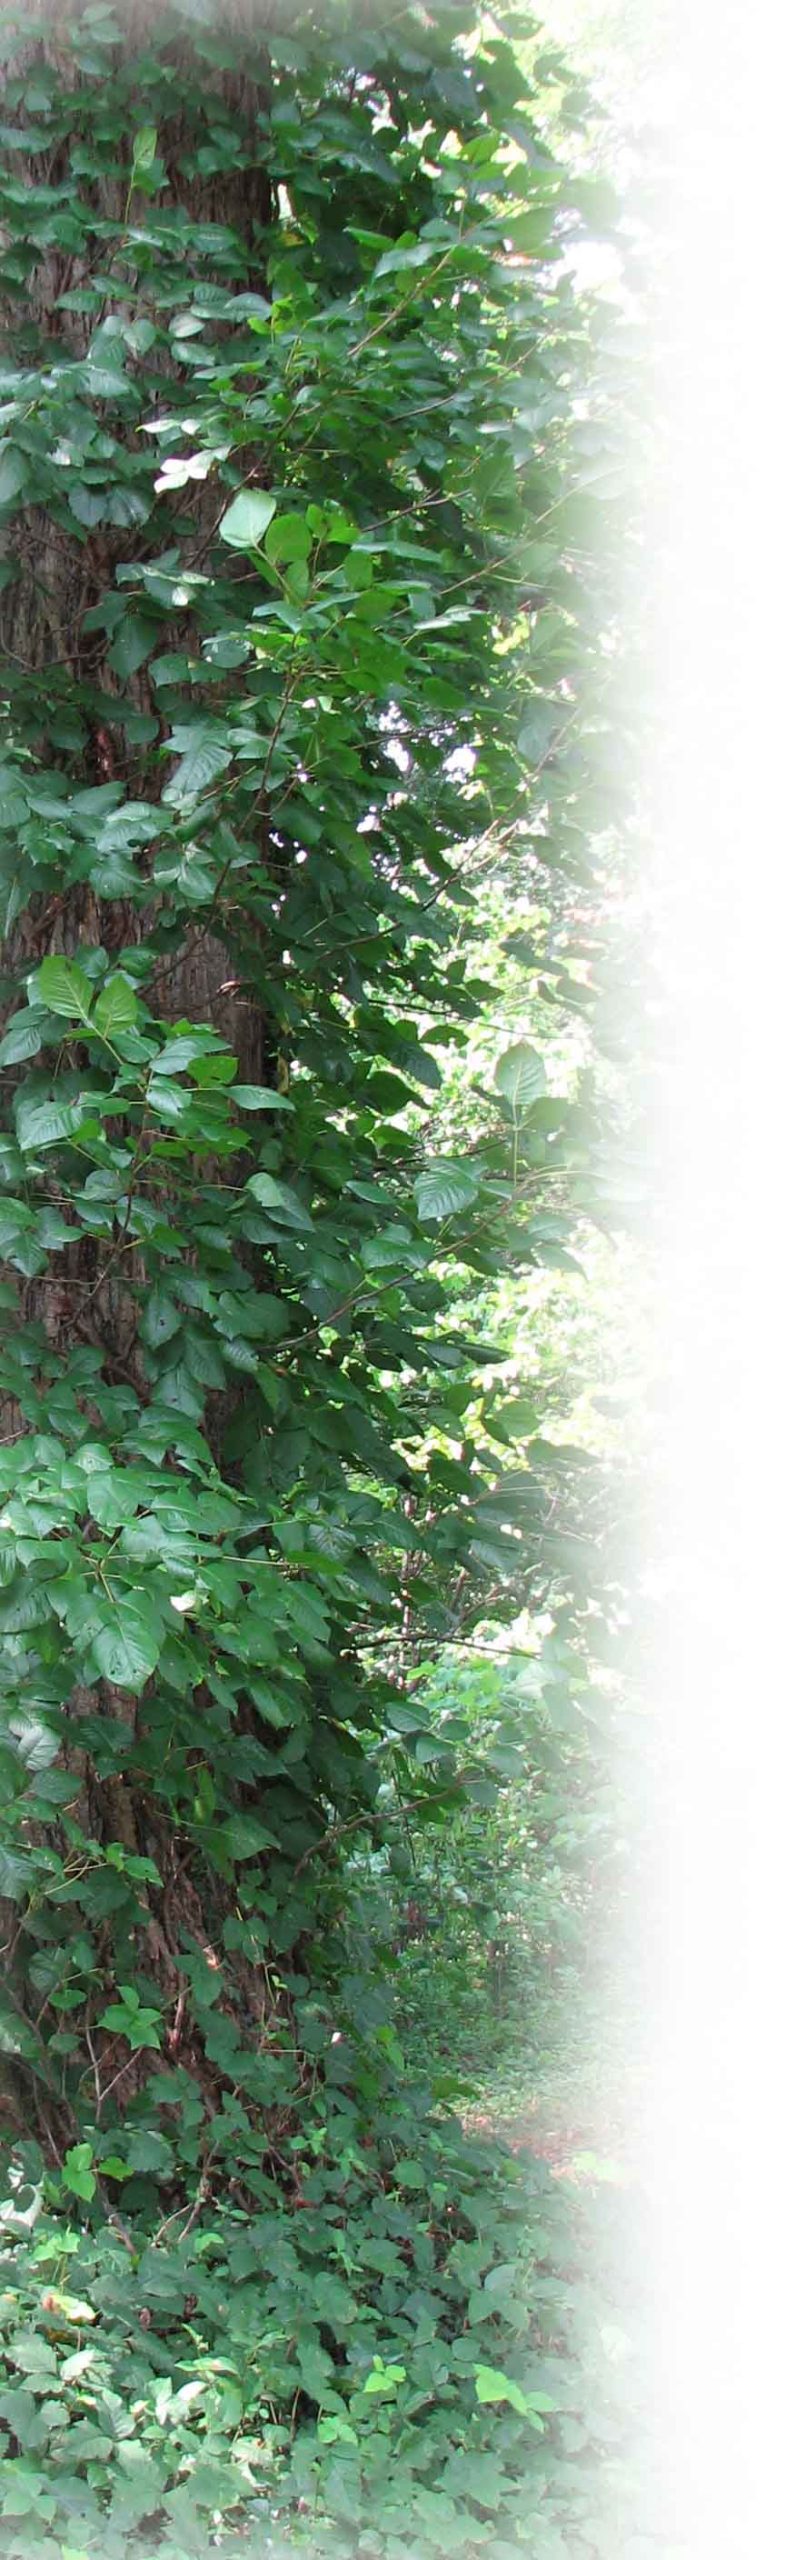 Poison Ivy on Tree